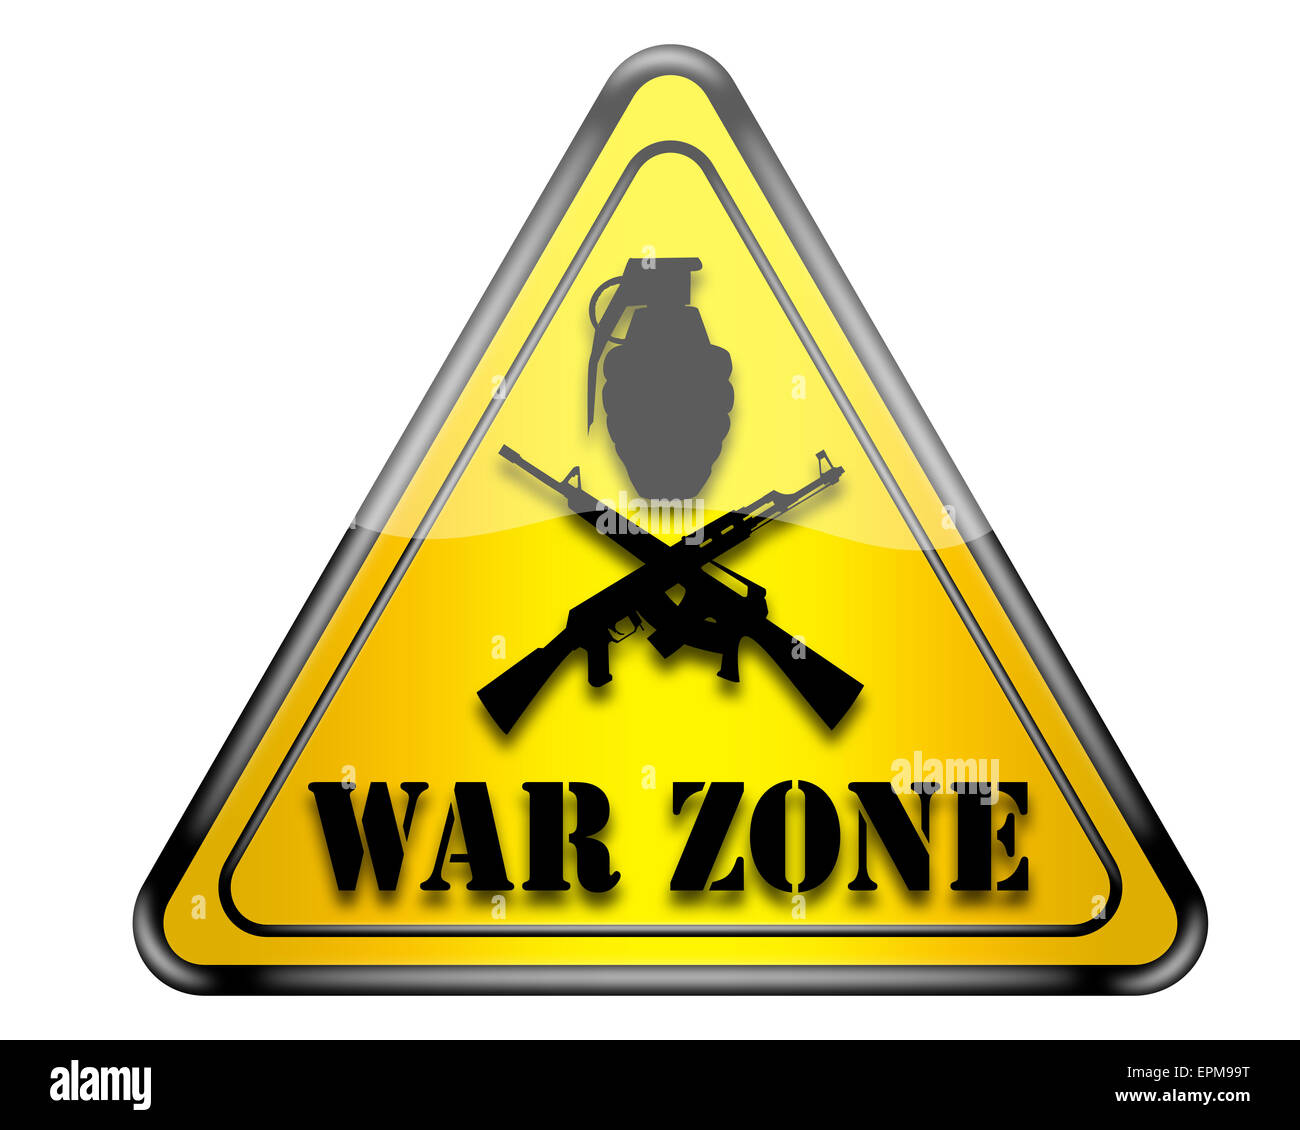 War zone sign. Stock Photo